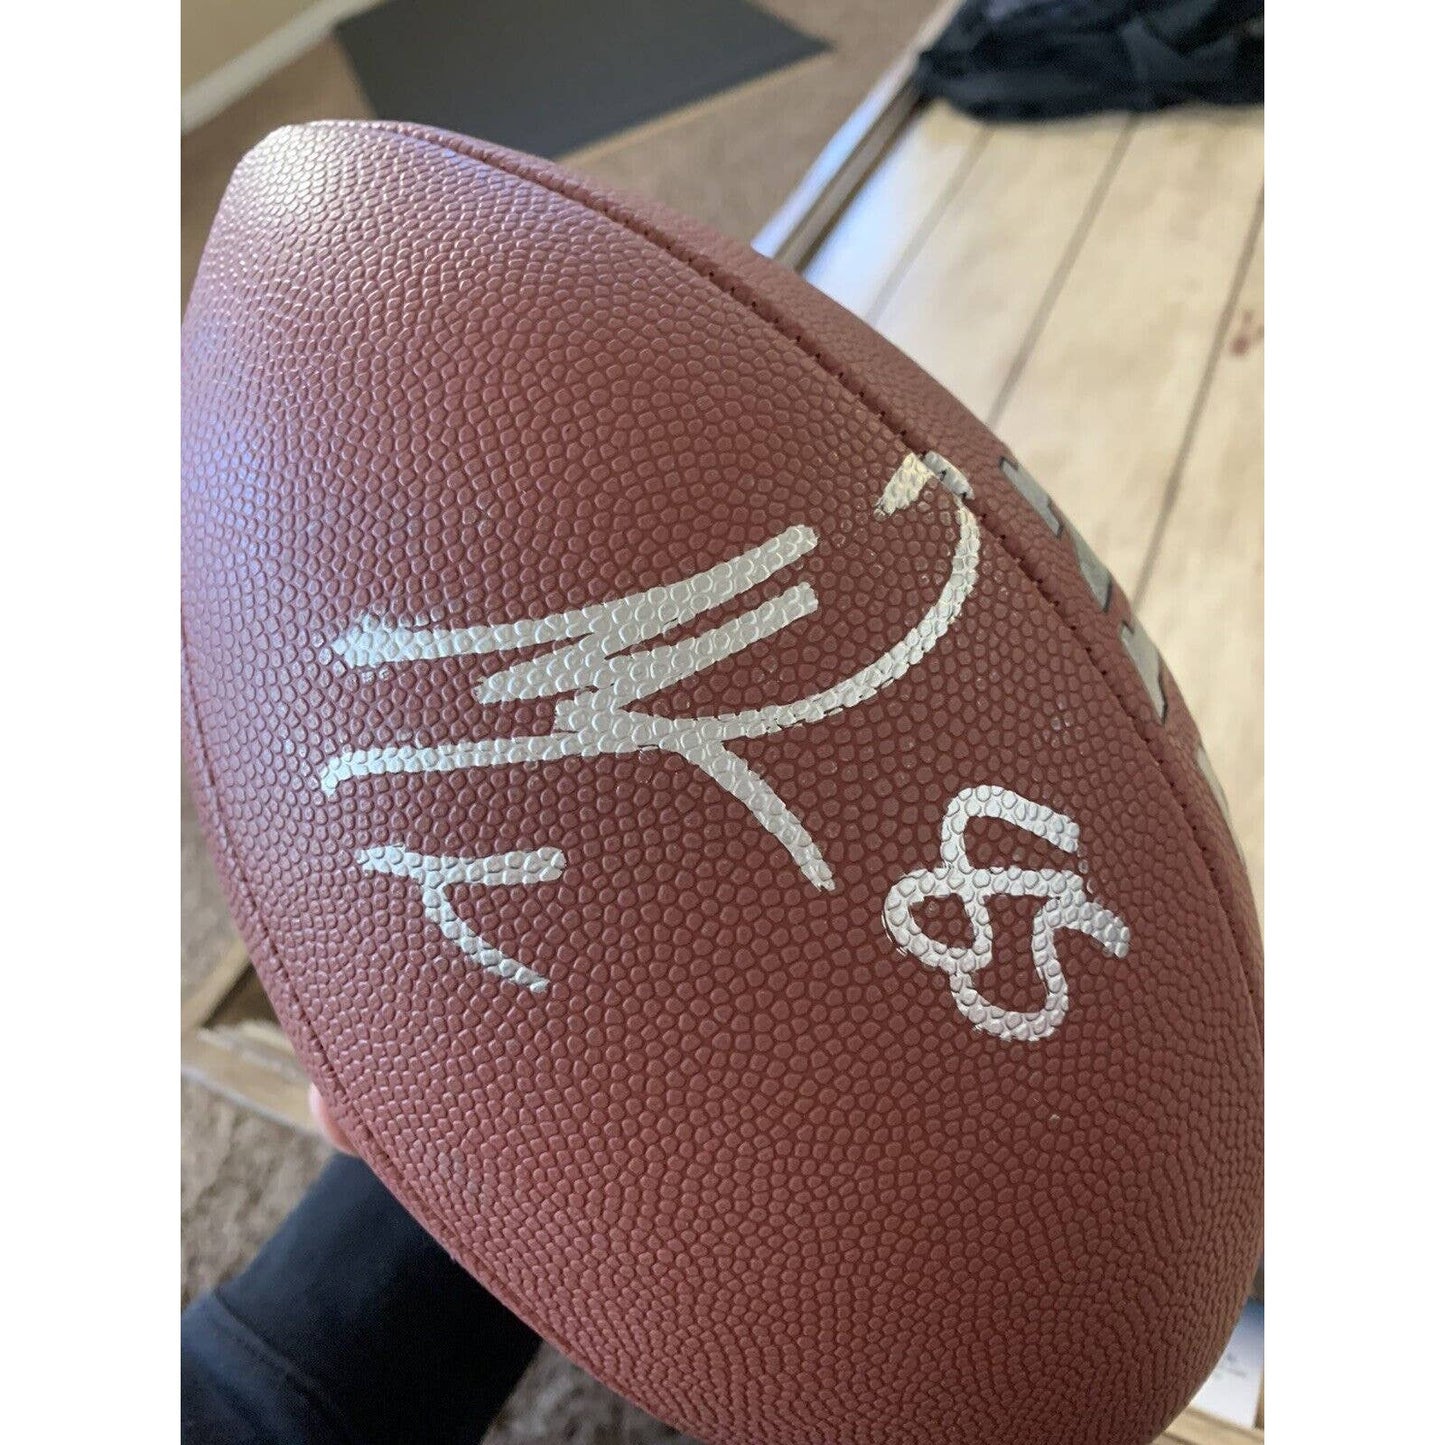 Antonio Gates Autographed/Signed Football JSA COA Los Angeles Chargers LA - TreasuresEvolved